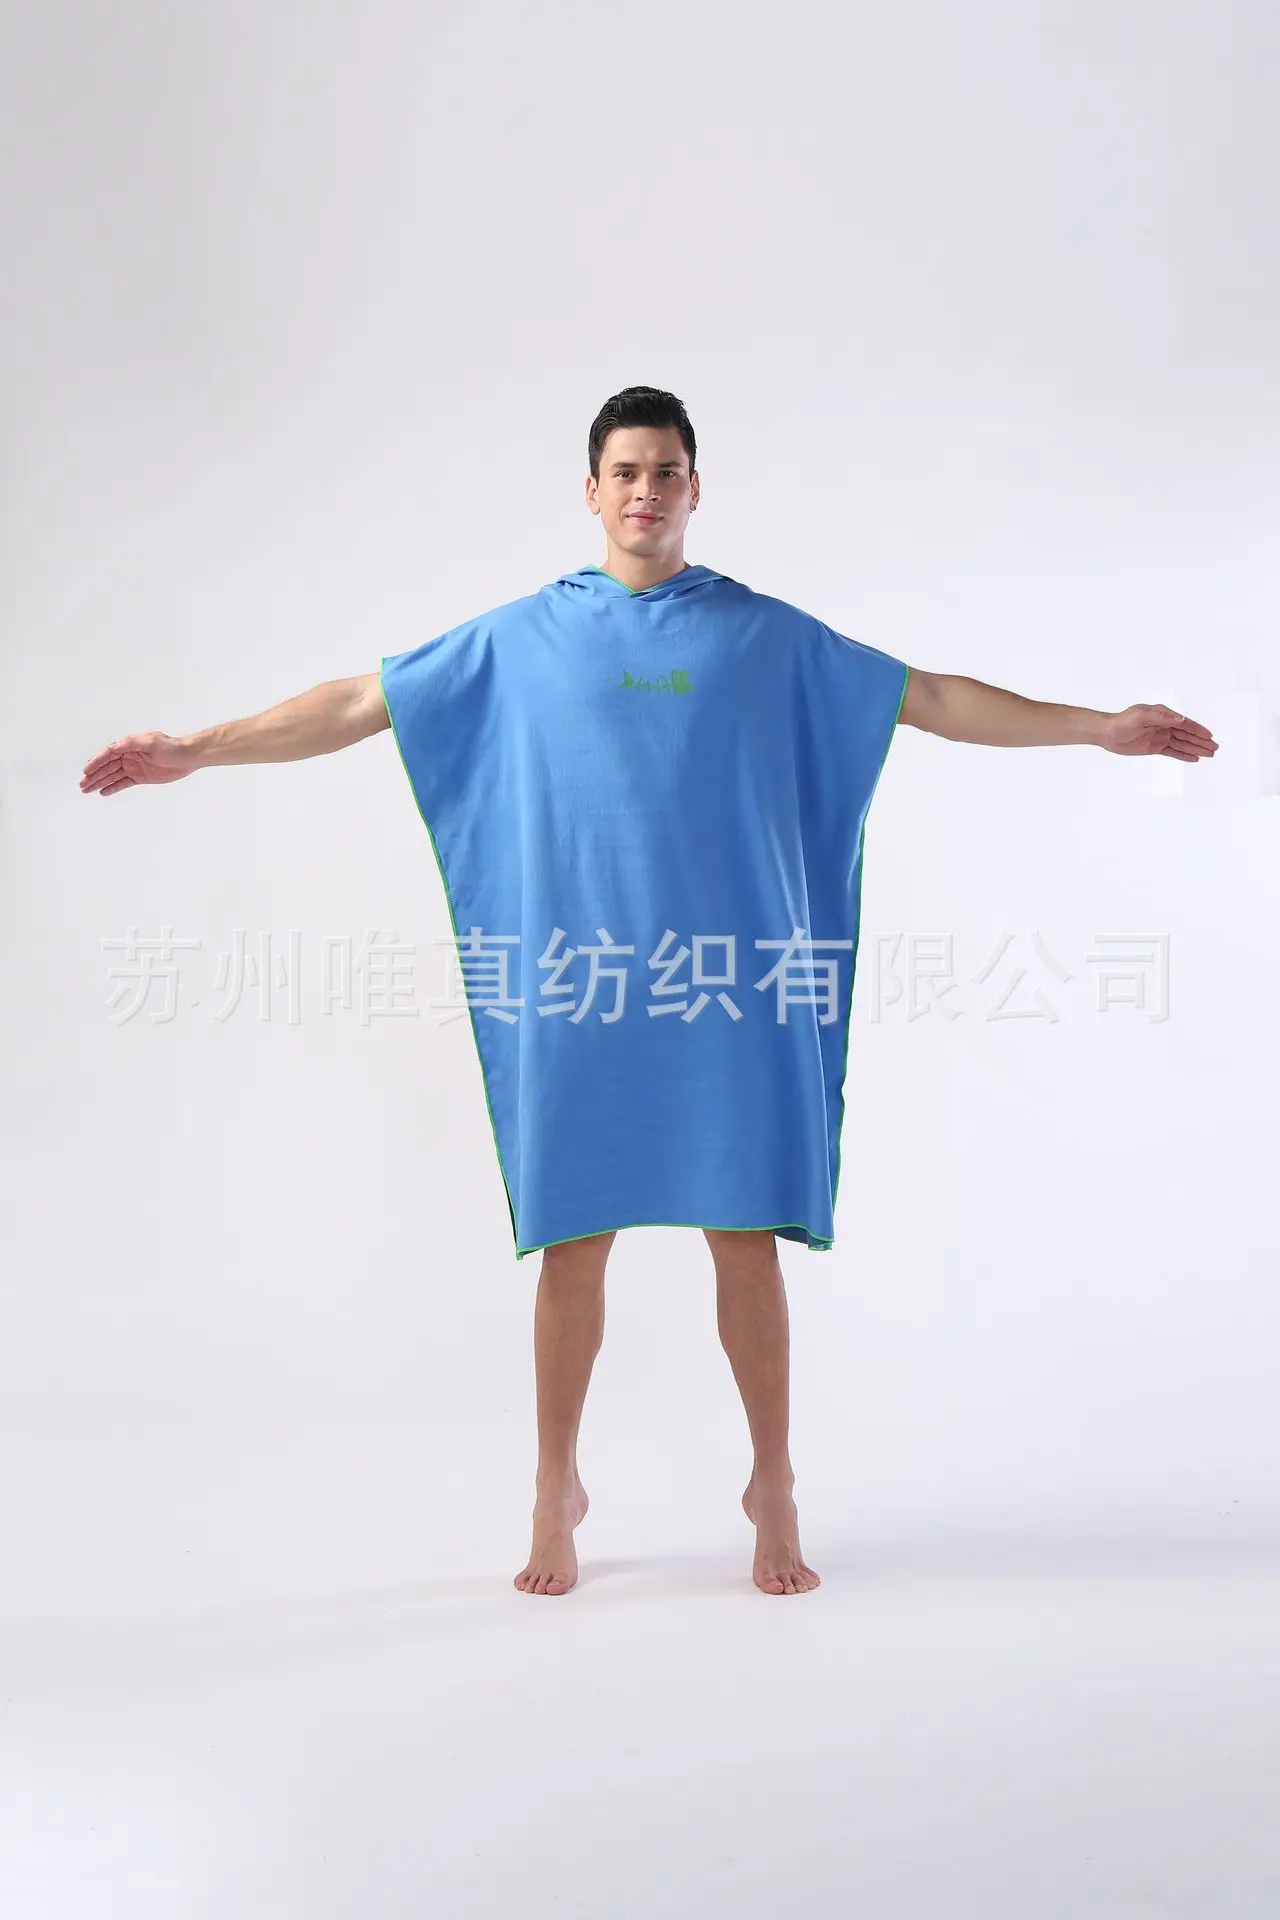 Superfine Fibre Huanyi Bathrobe OEM Quick-Dry Adult Beach Swimming Towel Cloak Sample Processing